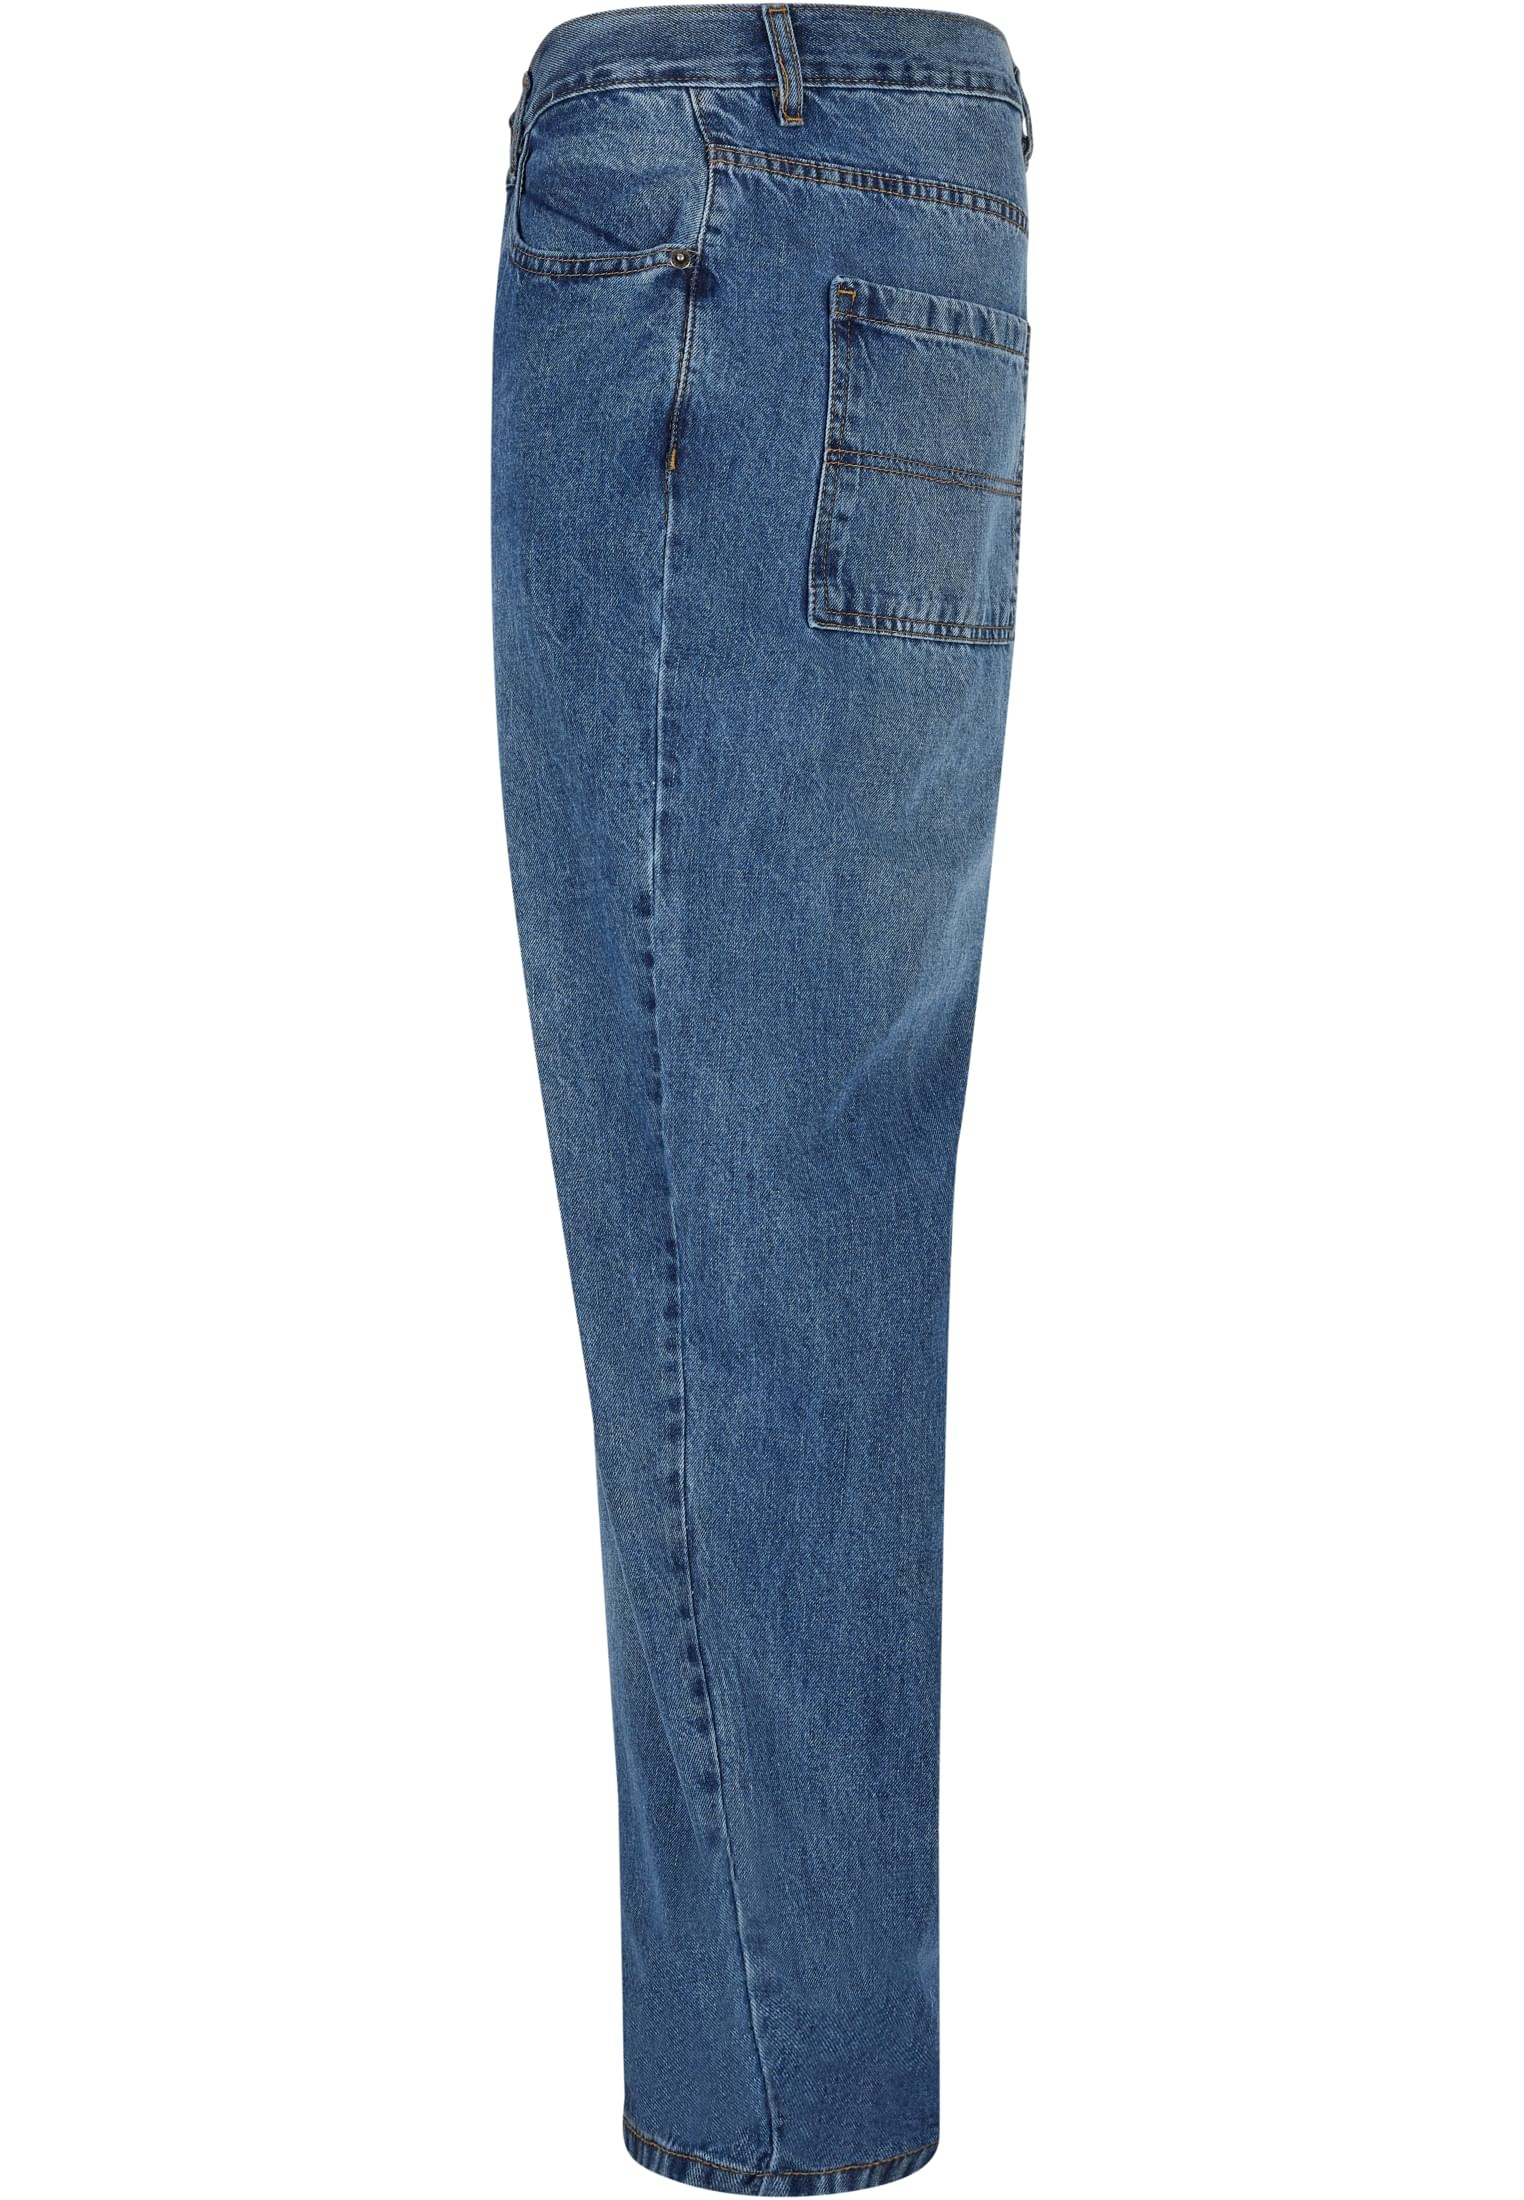 (1 CLASSICS Shorts«, Jeans Relaxed Stoffhose | URBAN für »Herren BAUR tlg.) Fit ▷